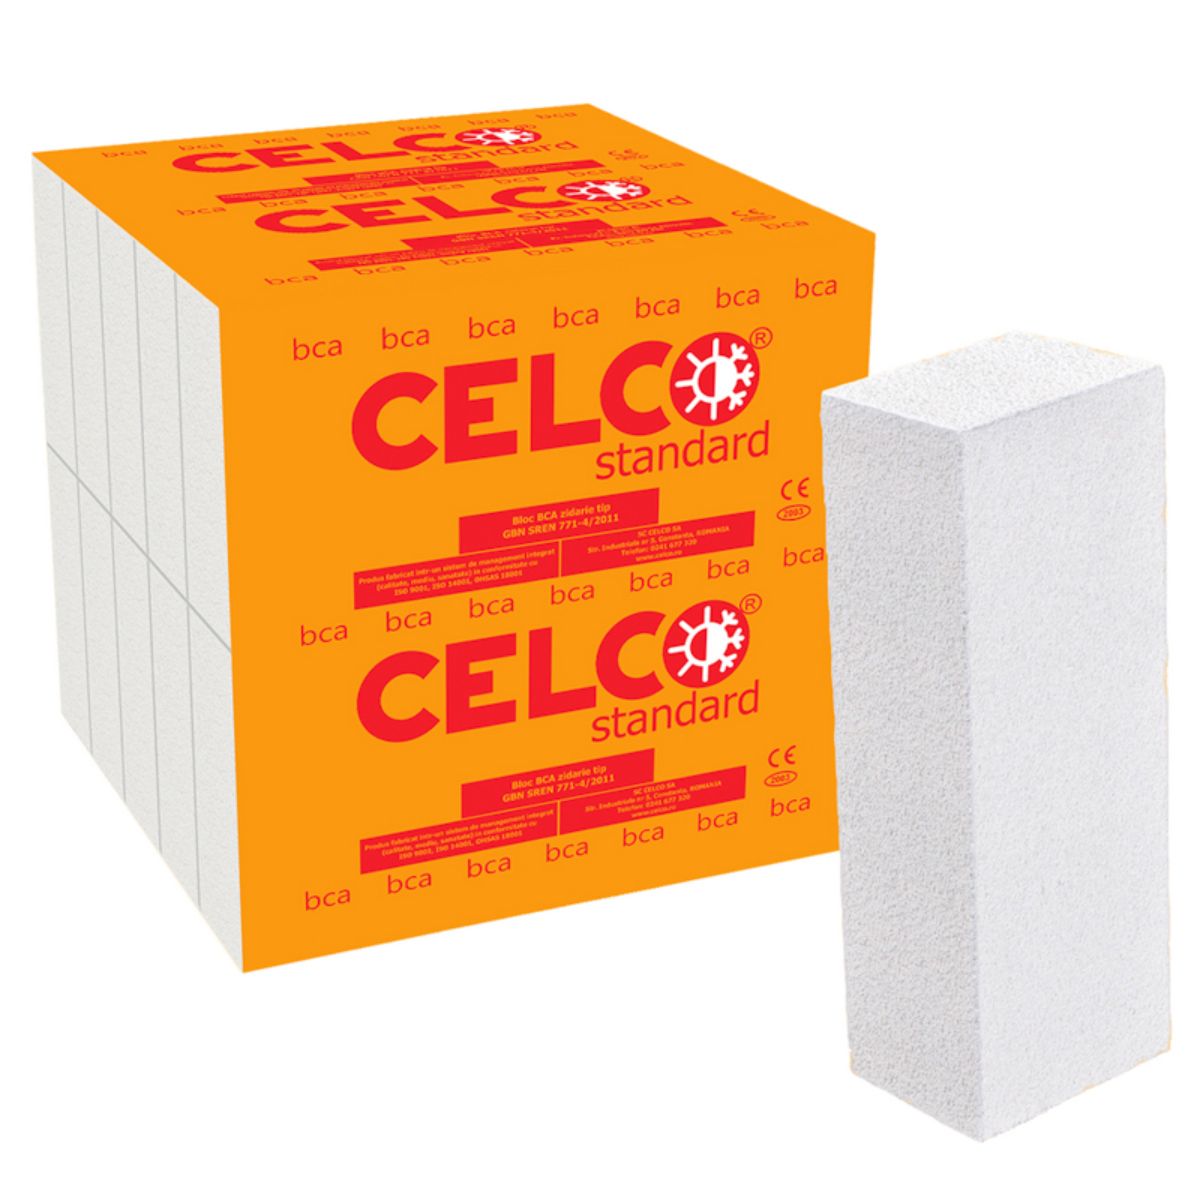 BCA Celco Standard A++ 625/375/240